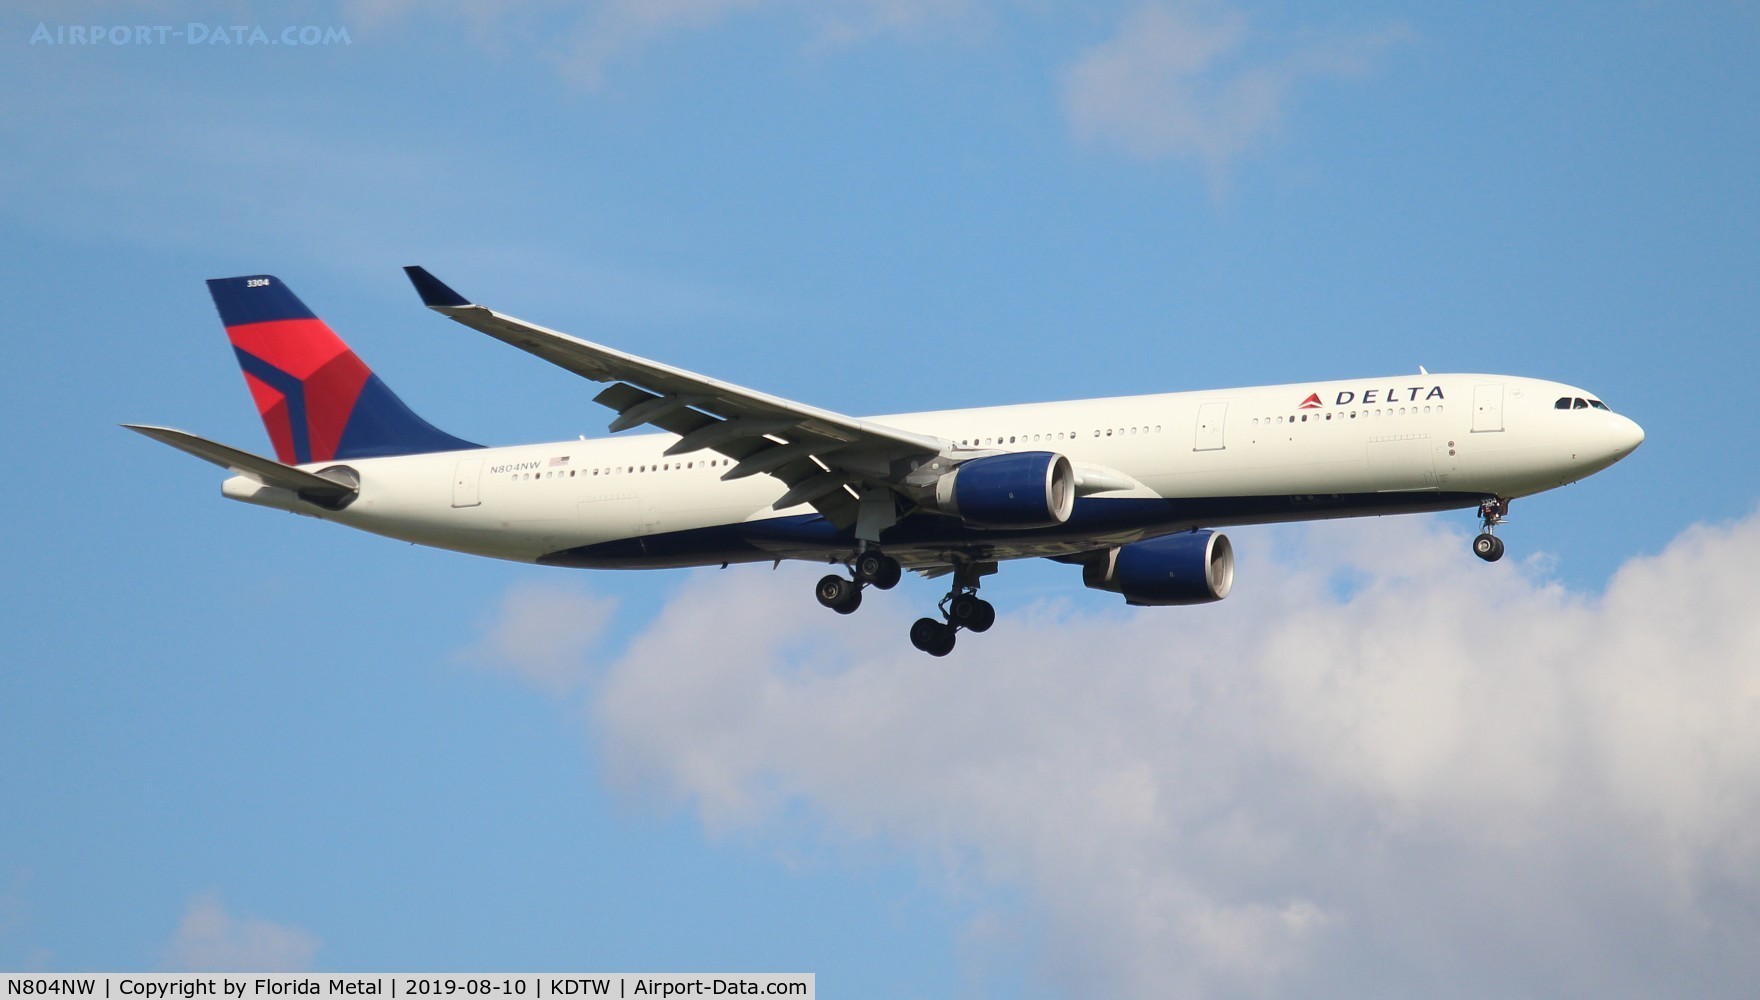 N804NW, 2003 Airbus A330-323 C/N 0549, Delta